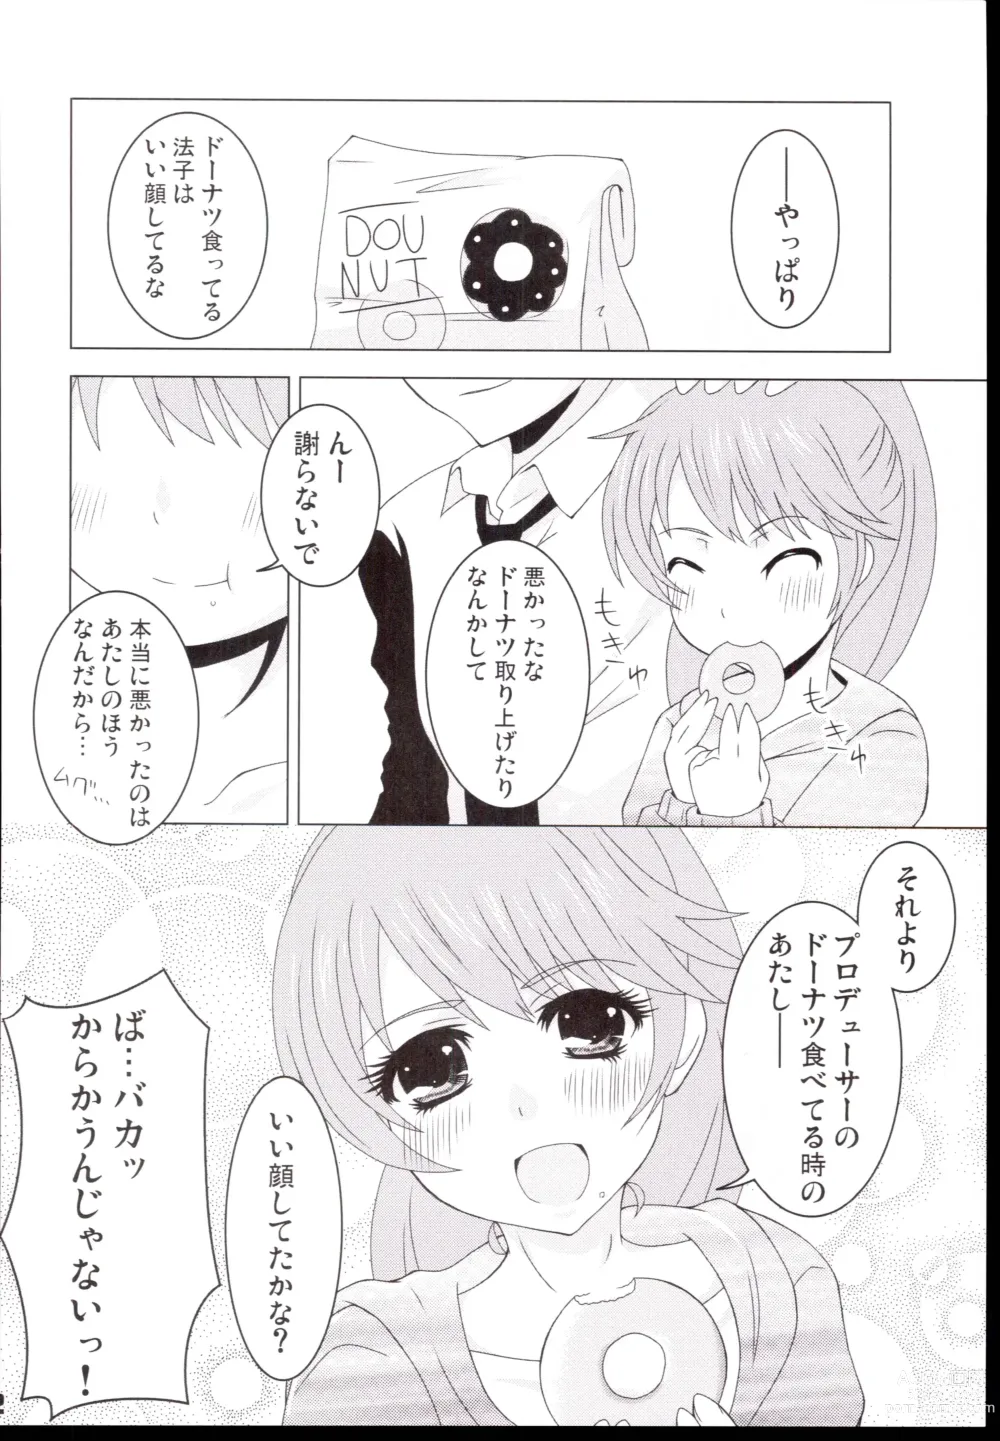 Page 24 of doujinshi Sweetx2 DonutS!